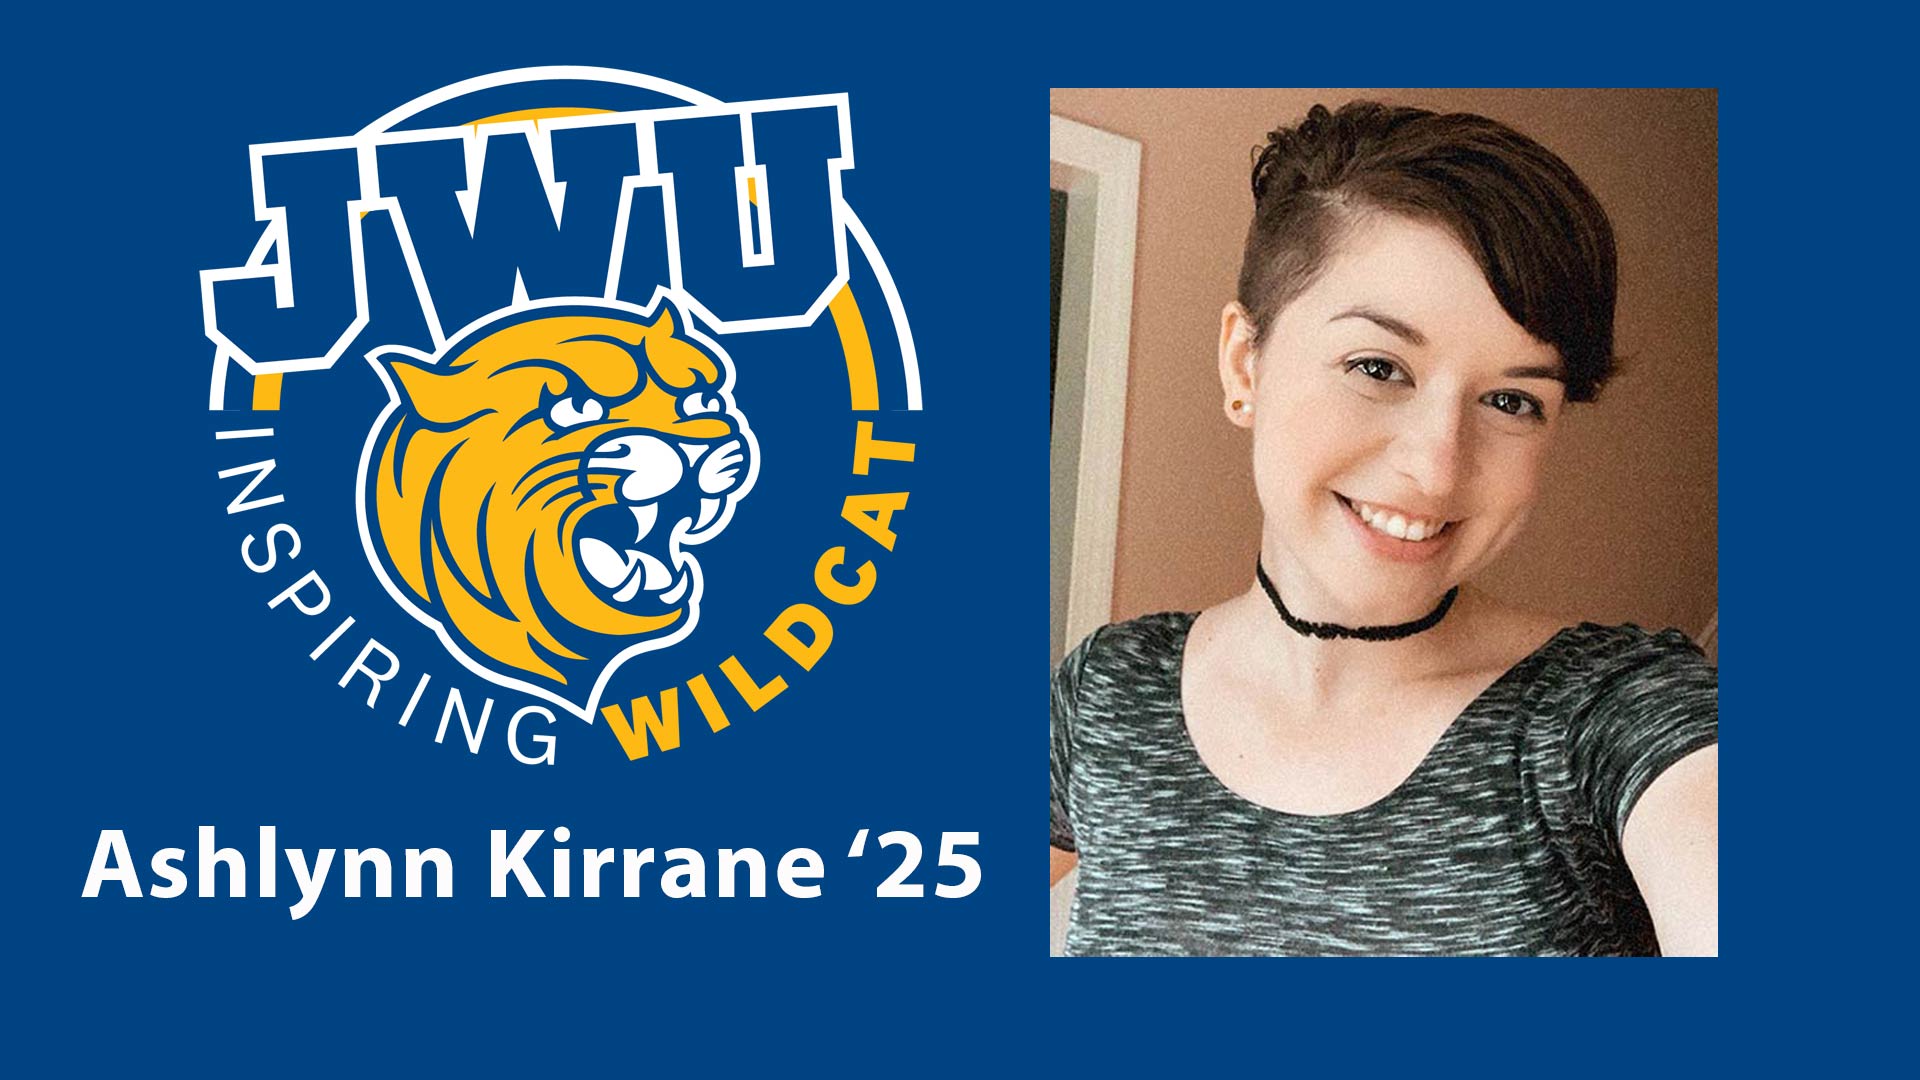 JWU Inspiring Wildcat logo next to a headshot of Ashlynn Kirrane '25